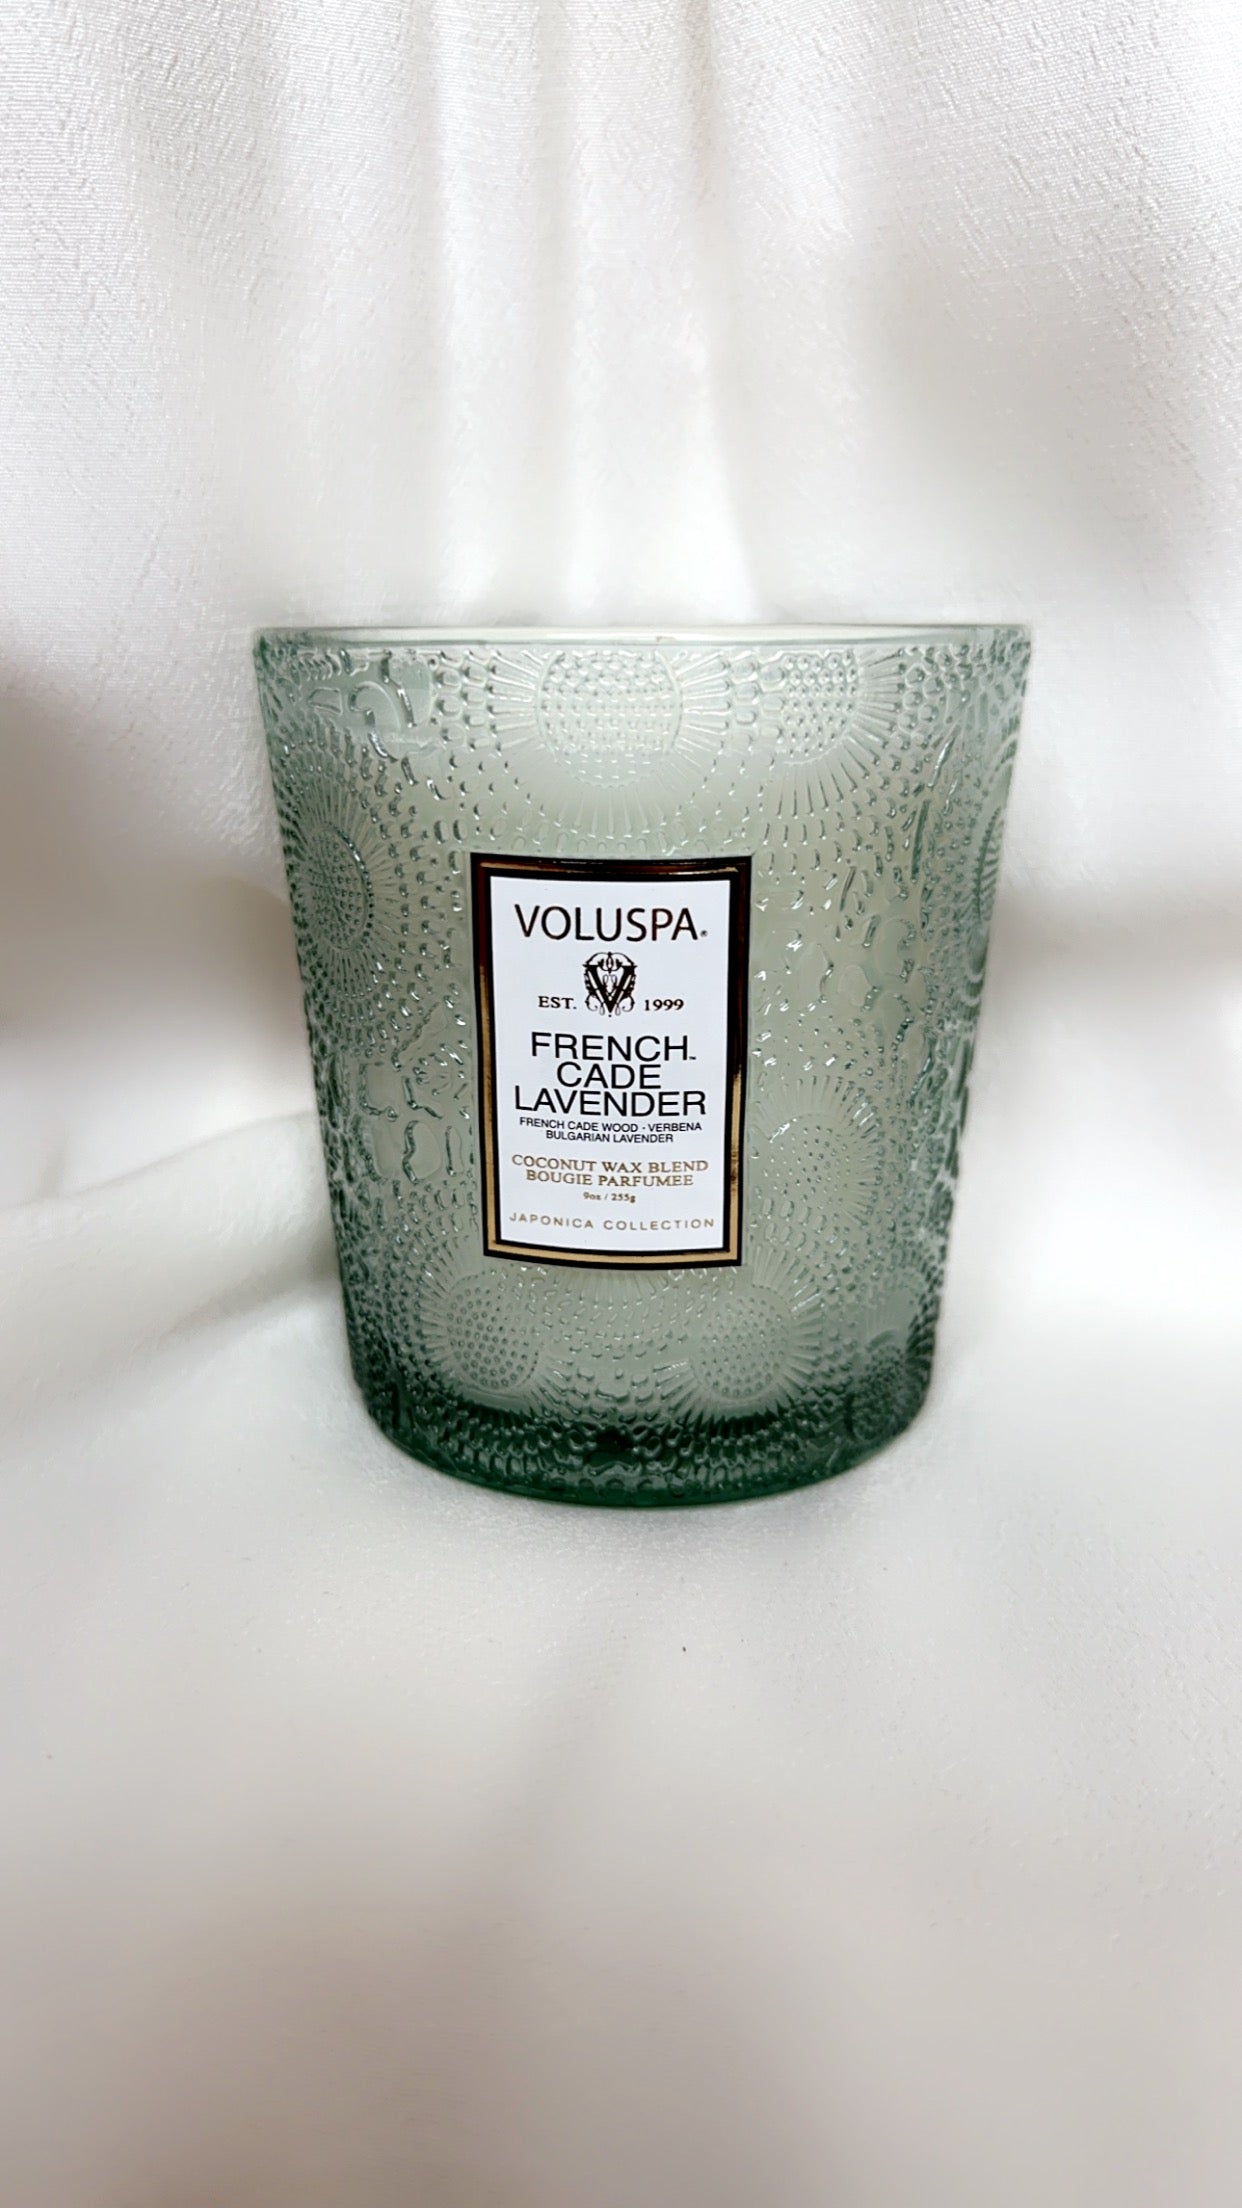 French Cade Lavender Voluspa Candle